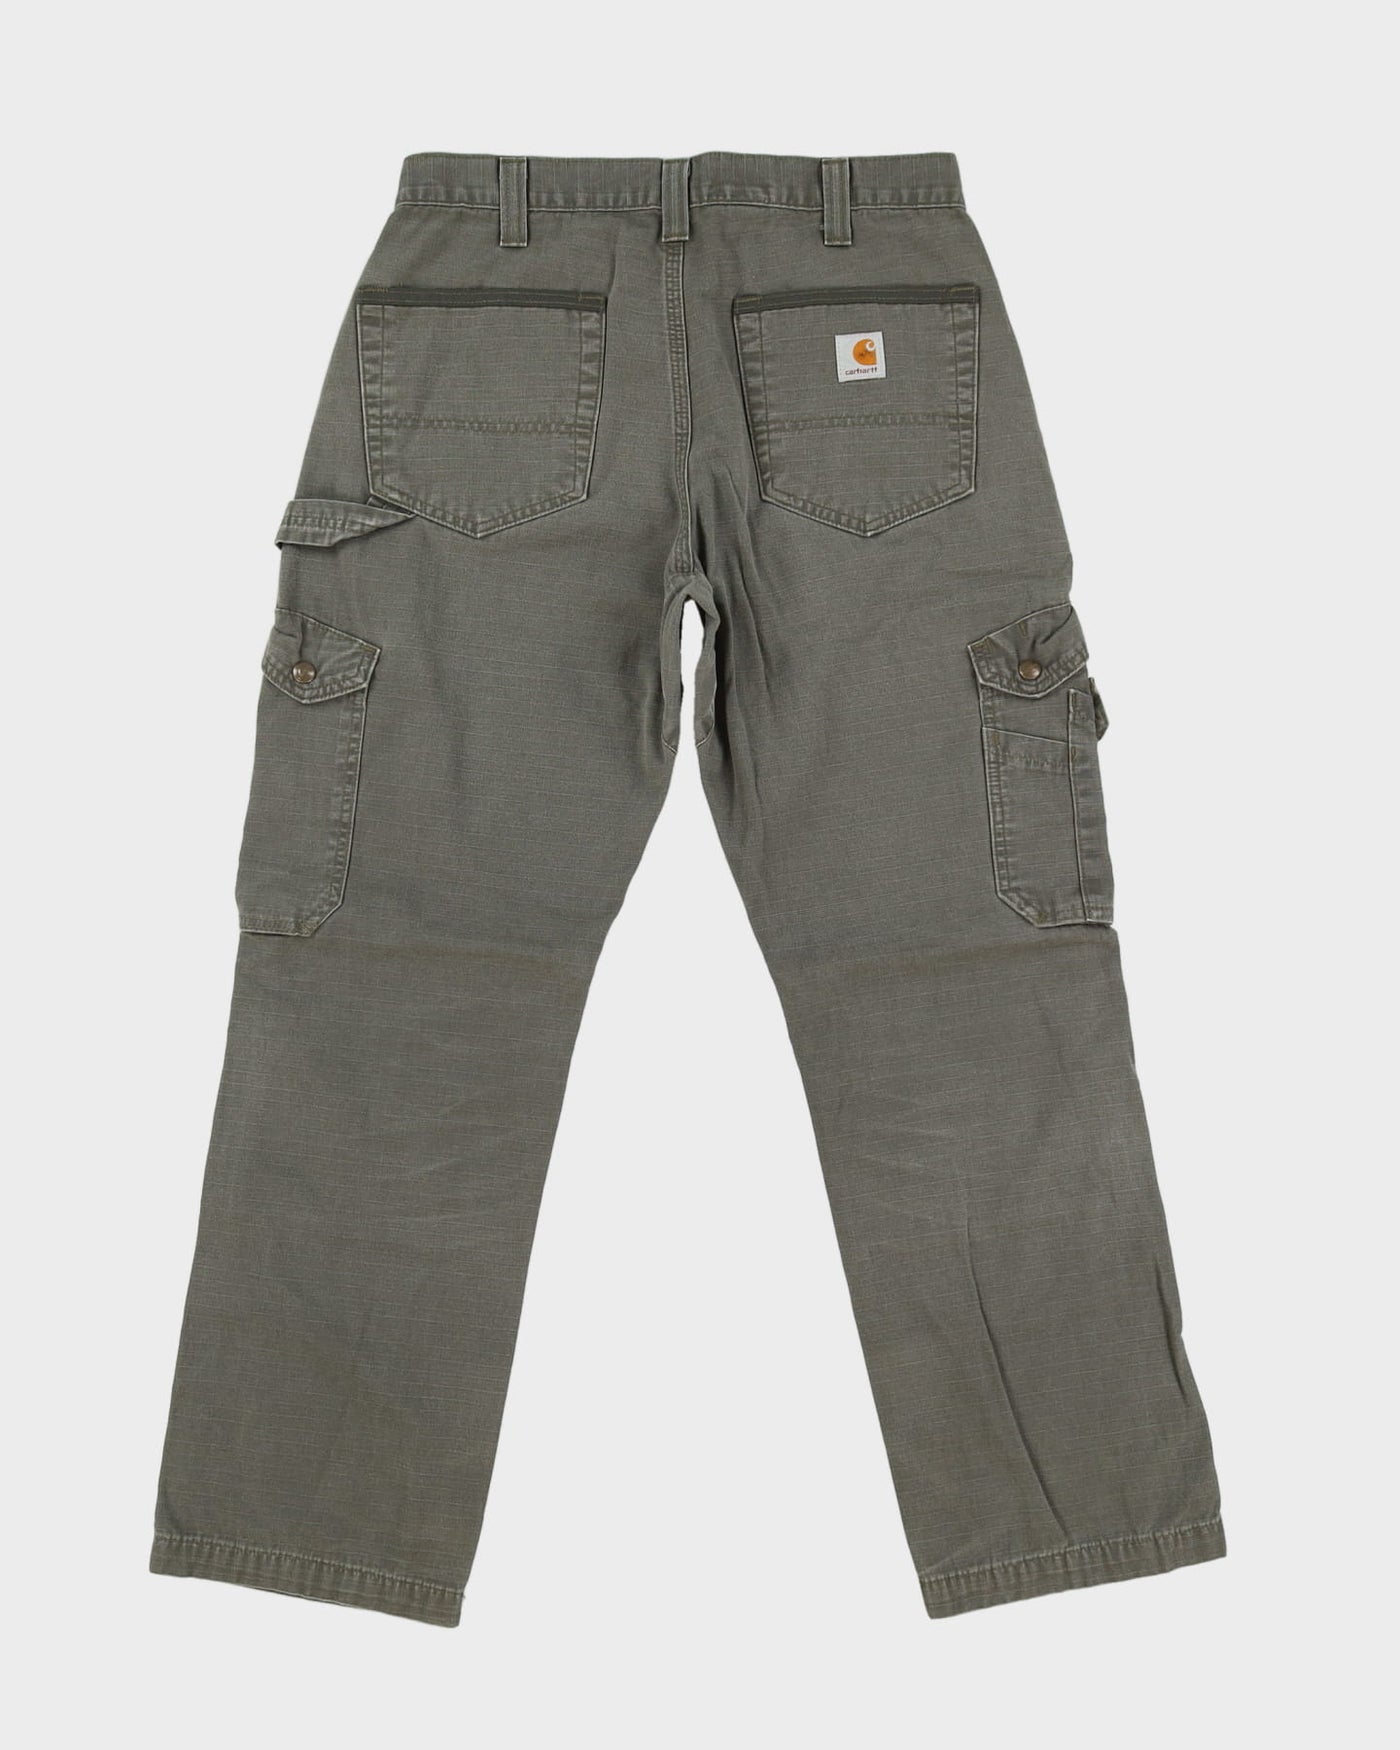 Vintage 90s Carhartt Green Double Knee Workwear Trousers / Jeans - W31 L29